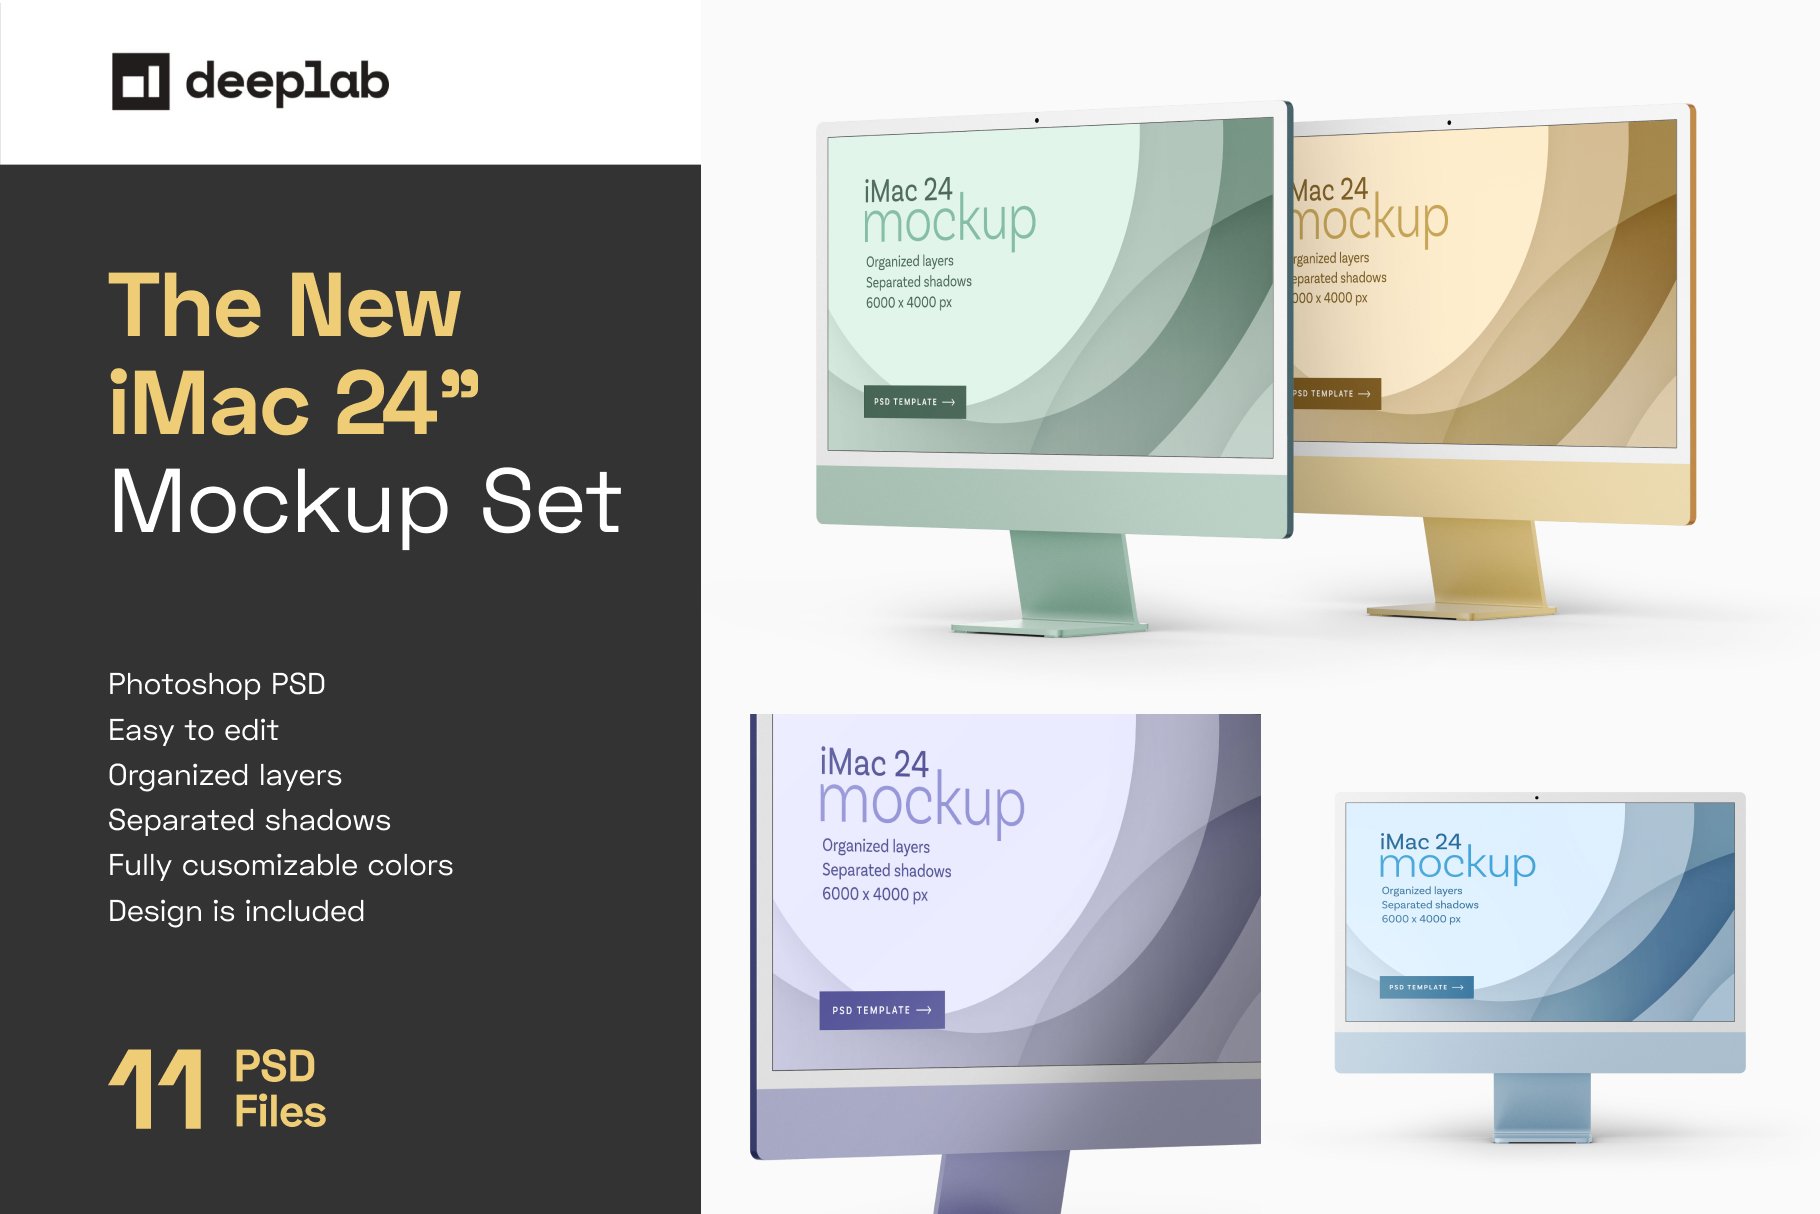 The New iMac 24” Mockup Set | 2021 cover image.